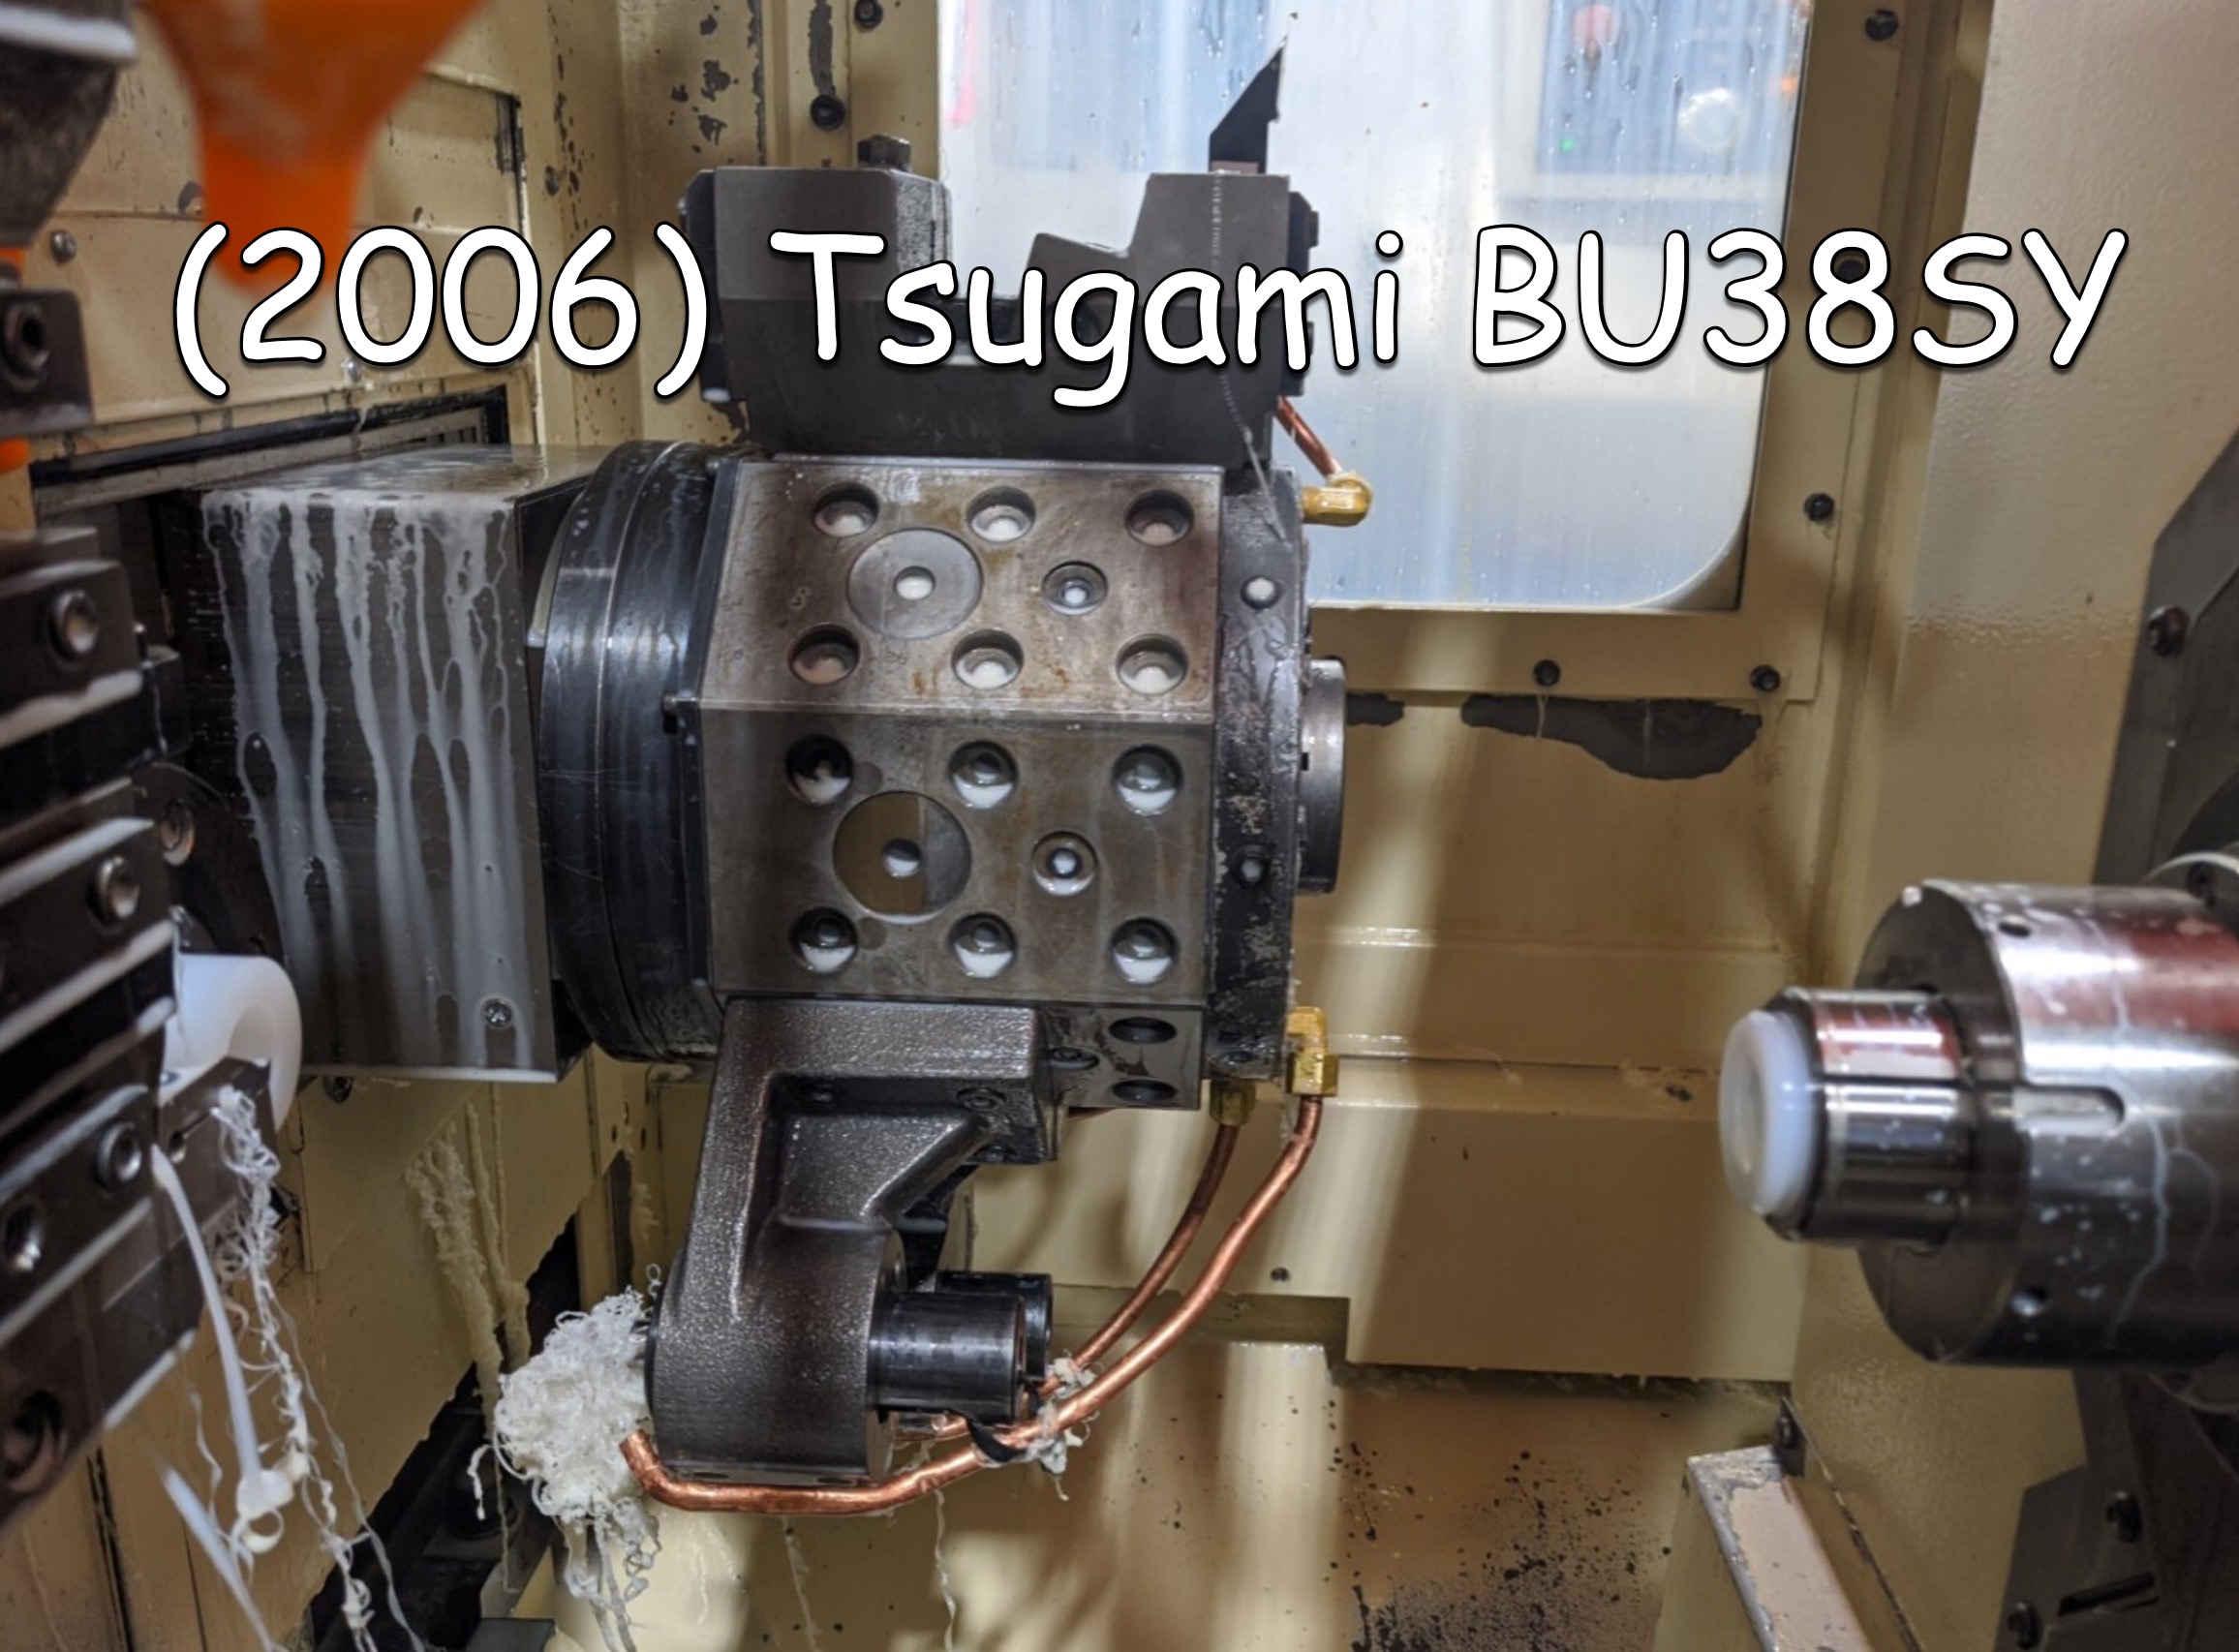  Tsugami BU 38sy Lathe - CNC  2006